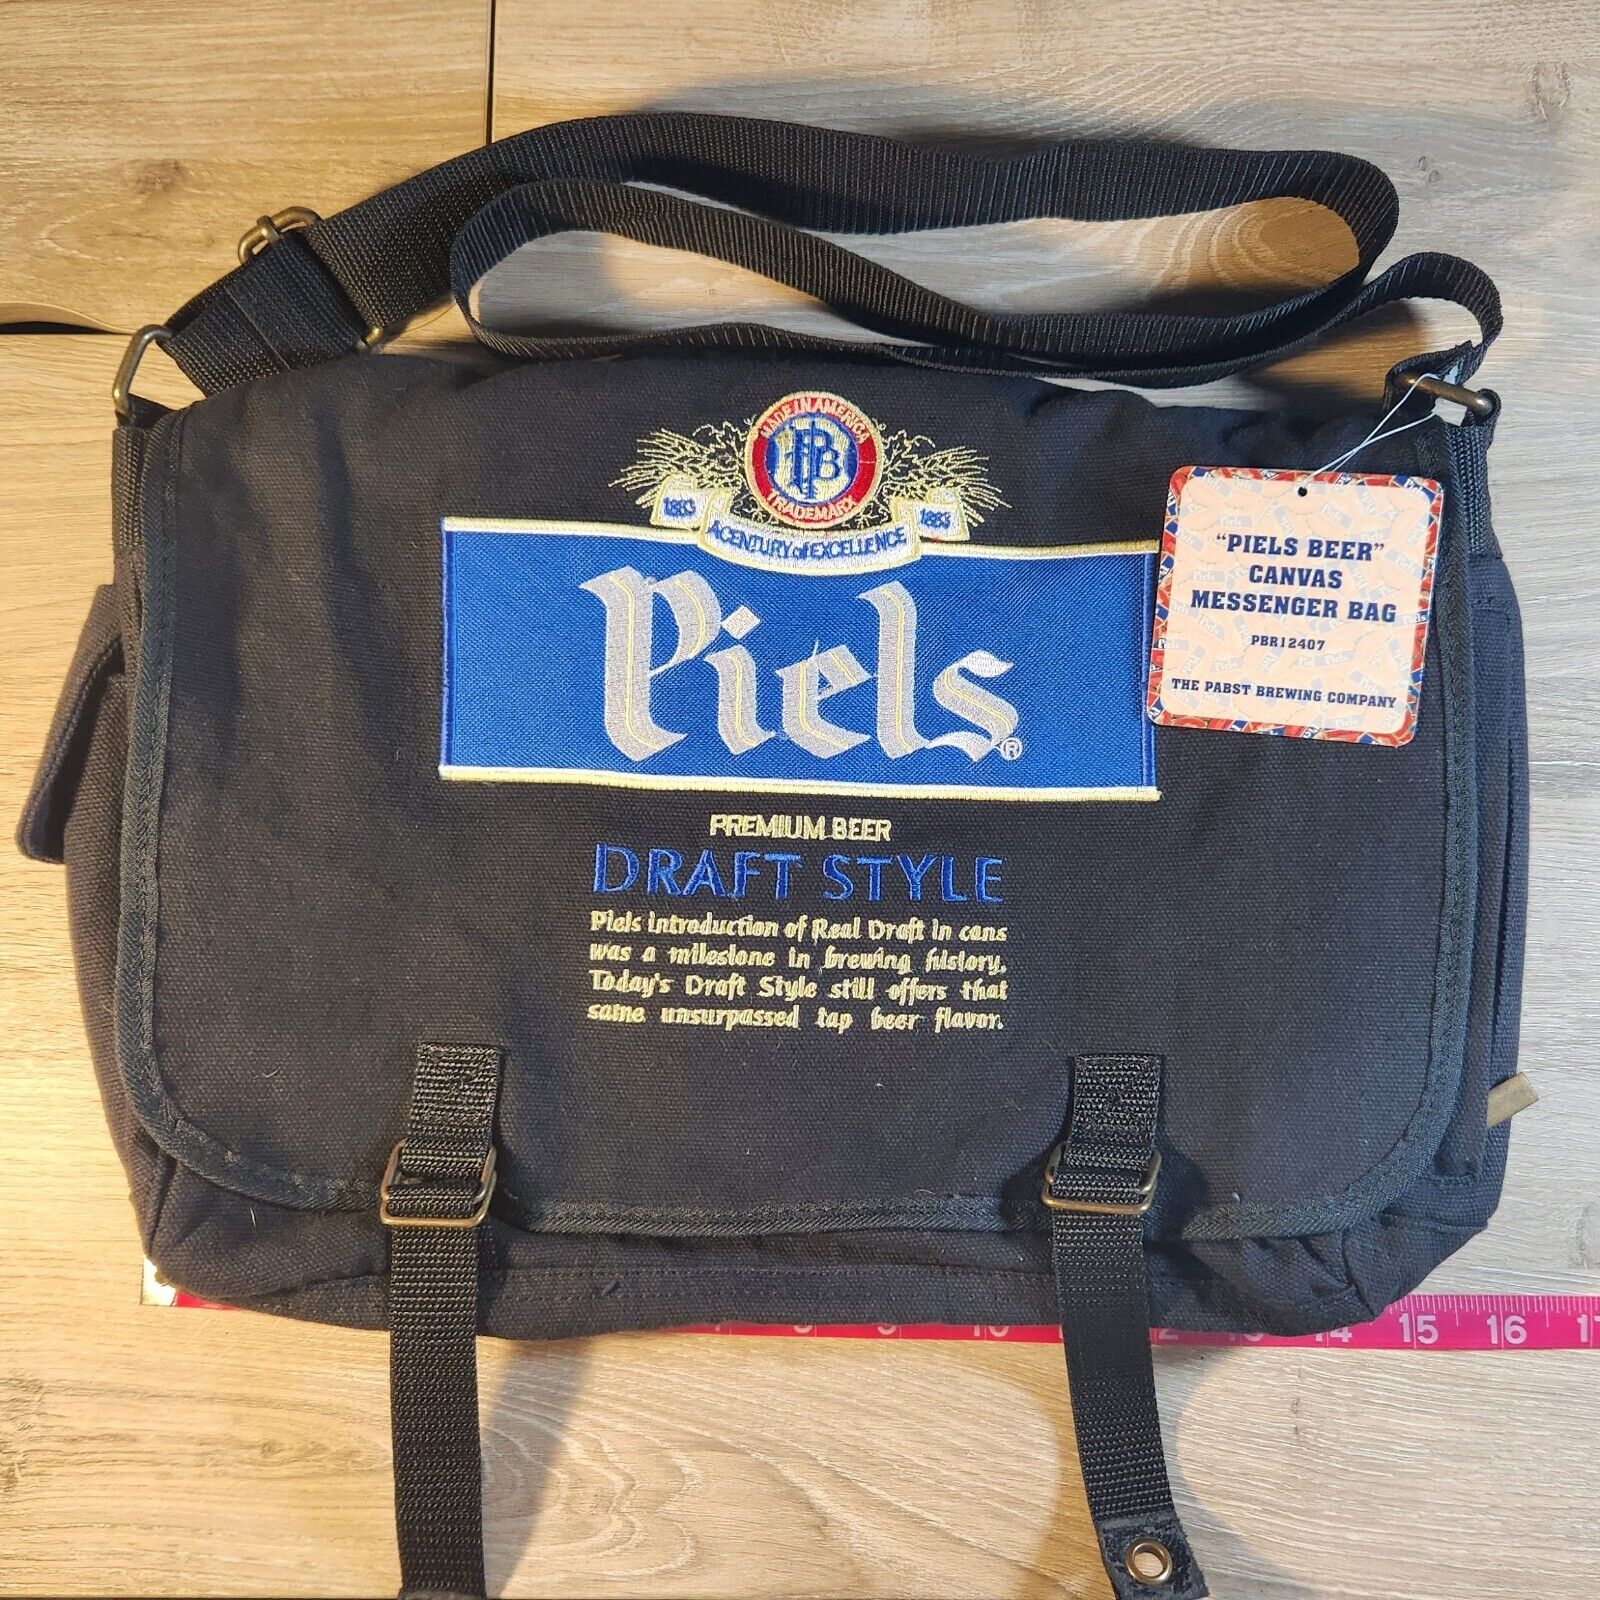 Piels Beer Black Canvas Messenger Bag Pabst Brewing Company Vintage Anniversary